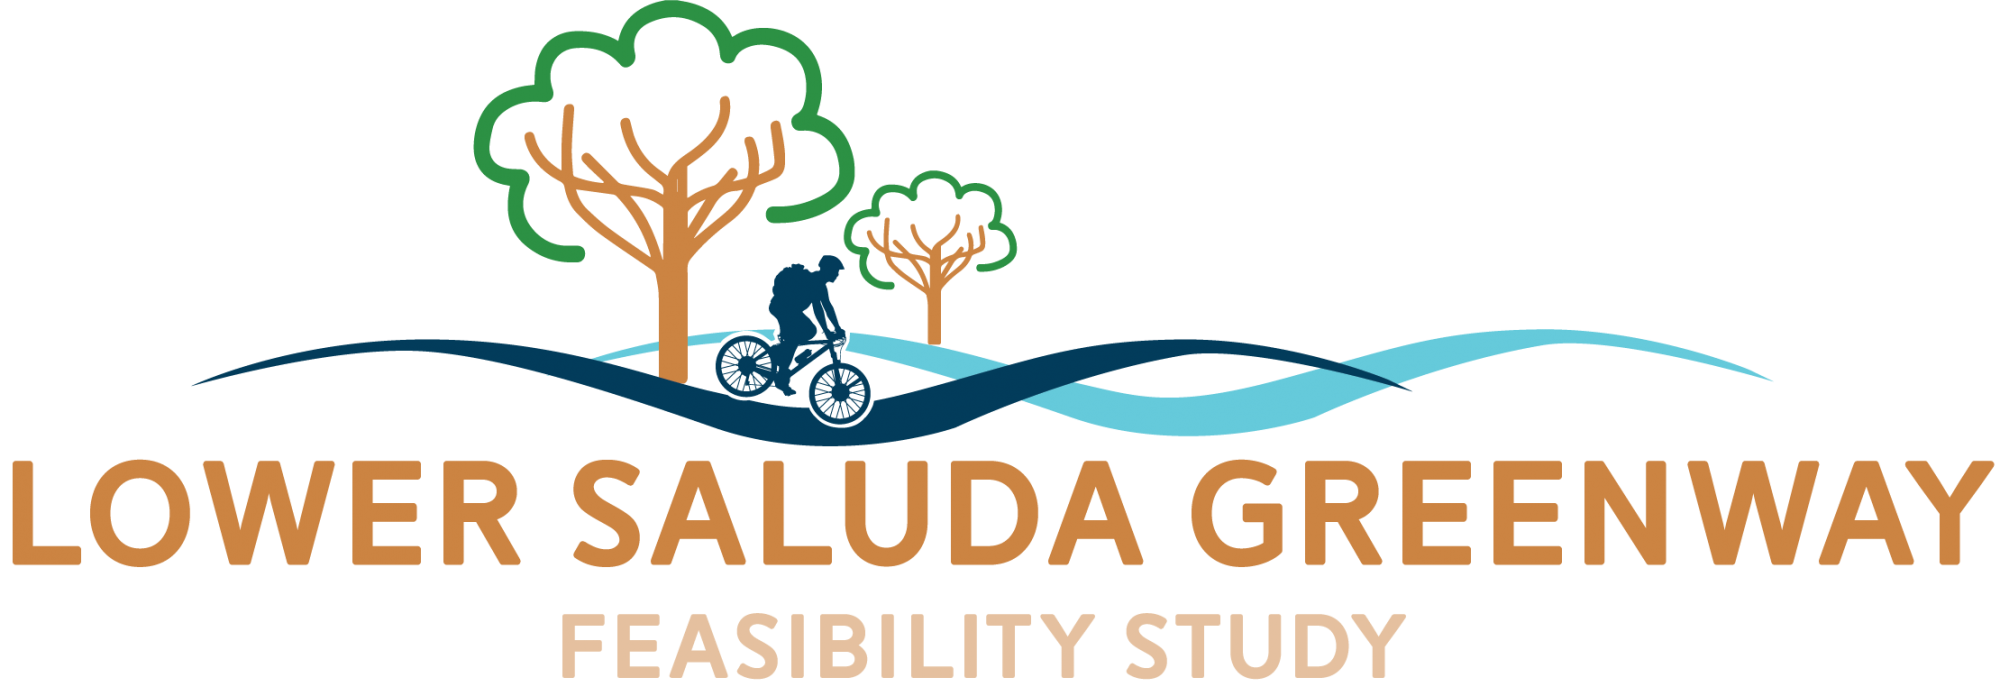 Lower Saluda Greenway Feasibility Study